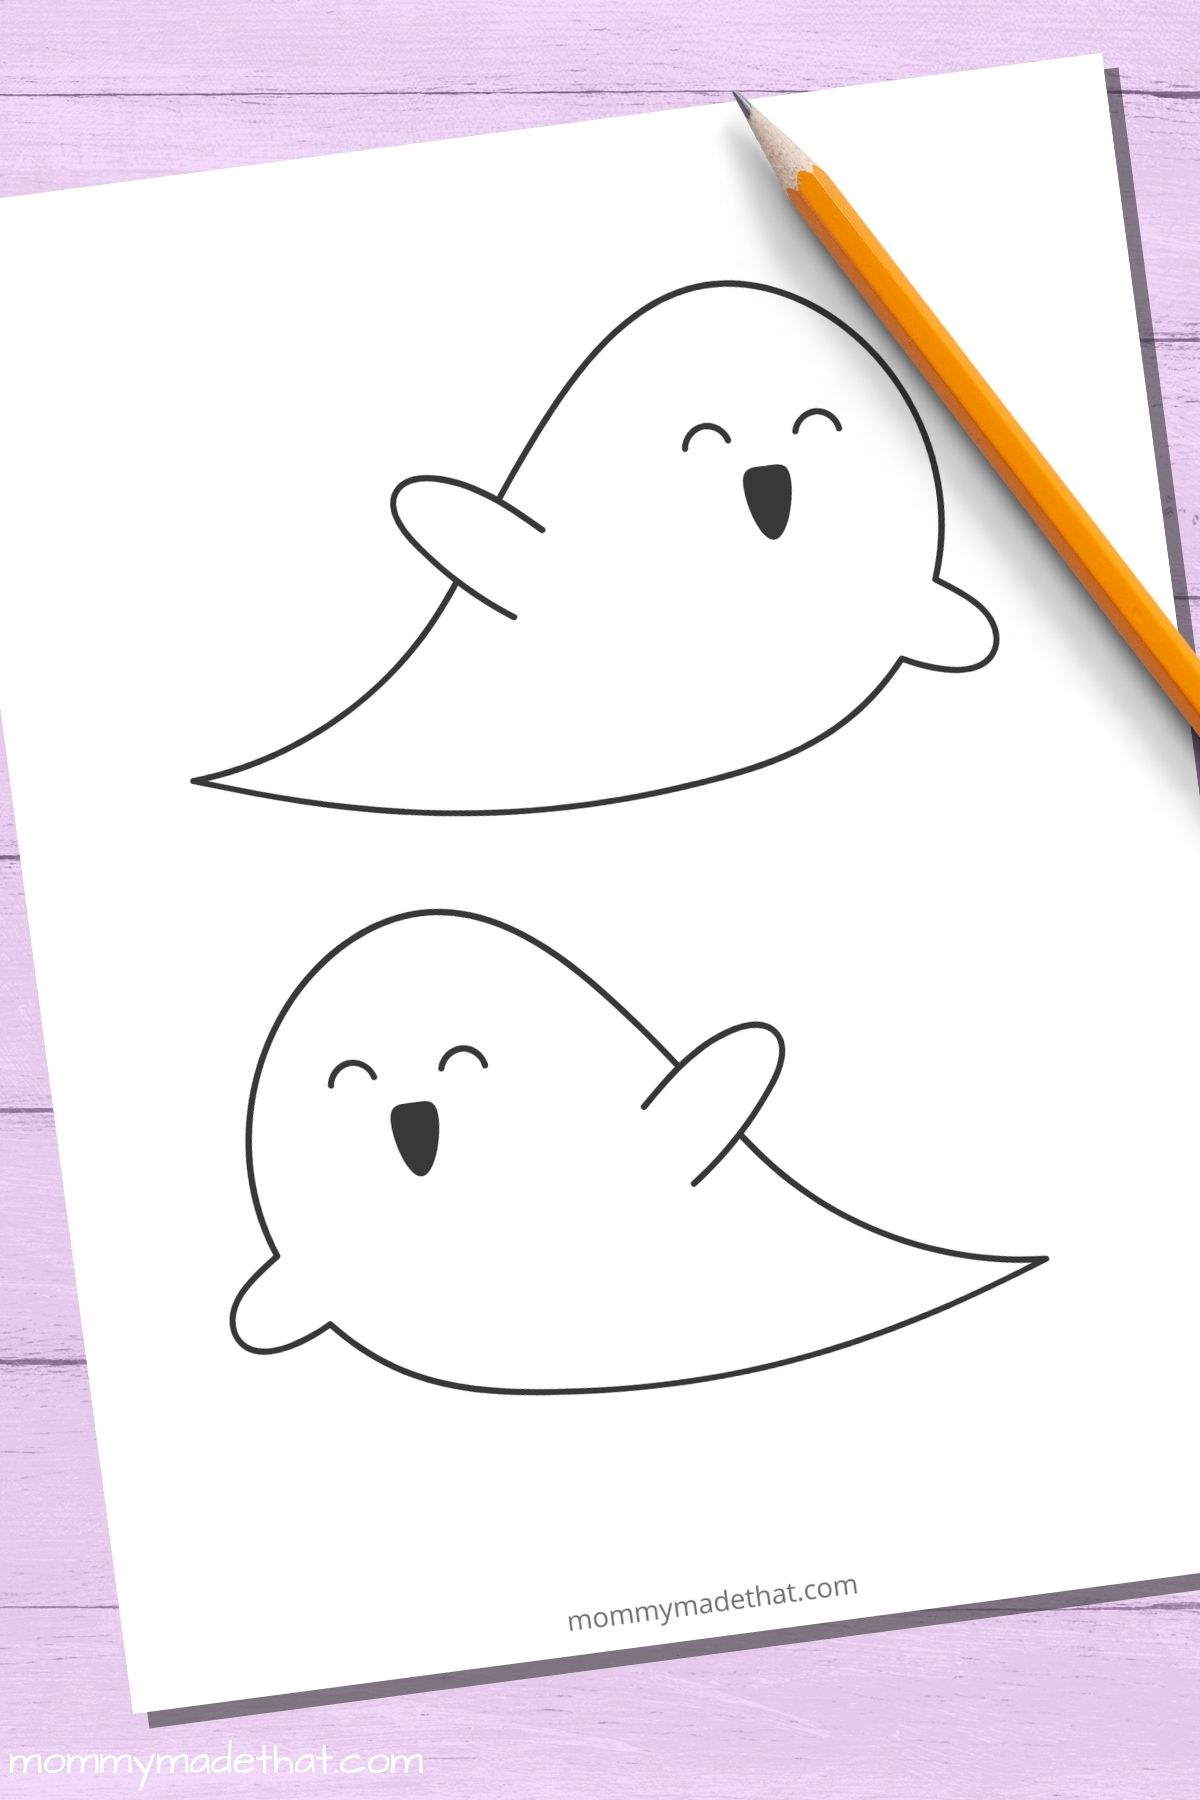 cute ghost templates